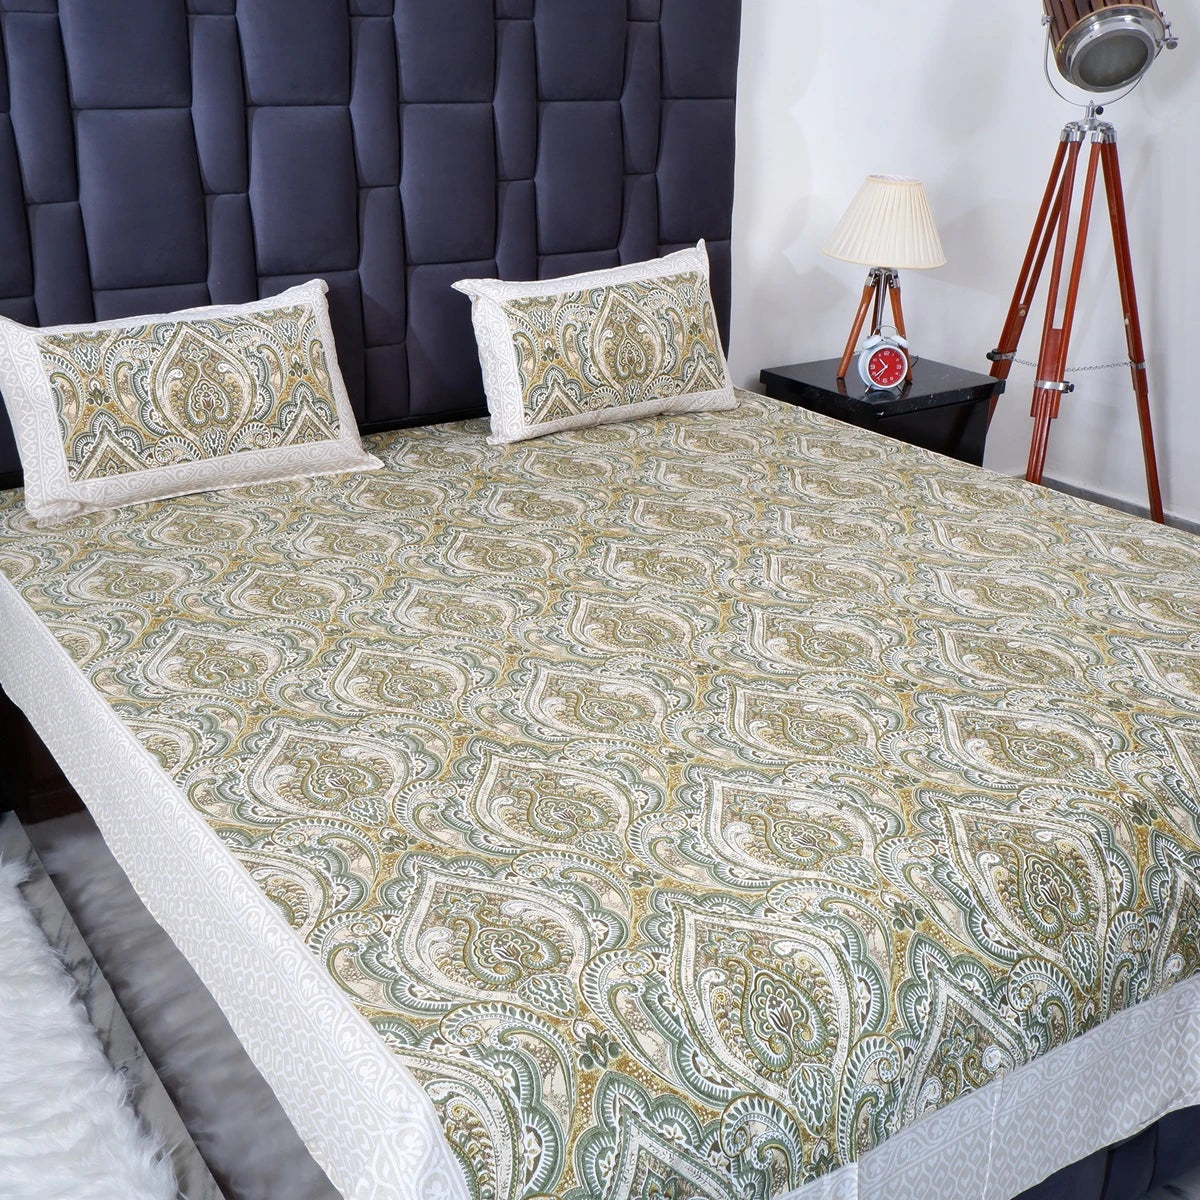 100% Pure Cotton Bed Sheet | Exquisite Jaipuri Cotton Bedding